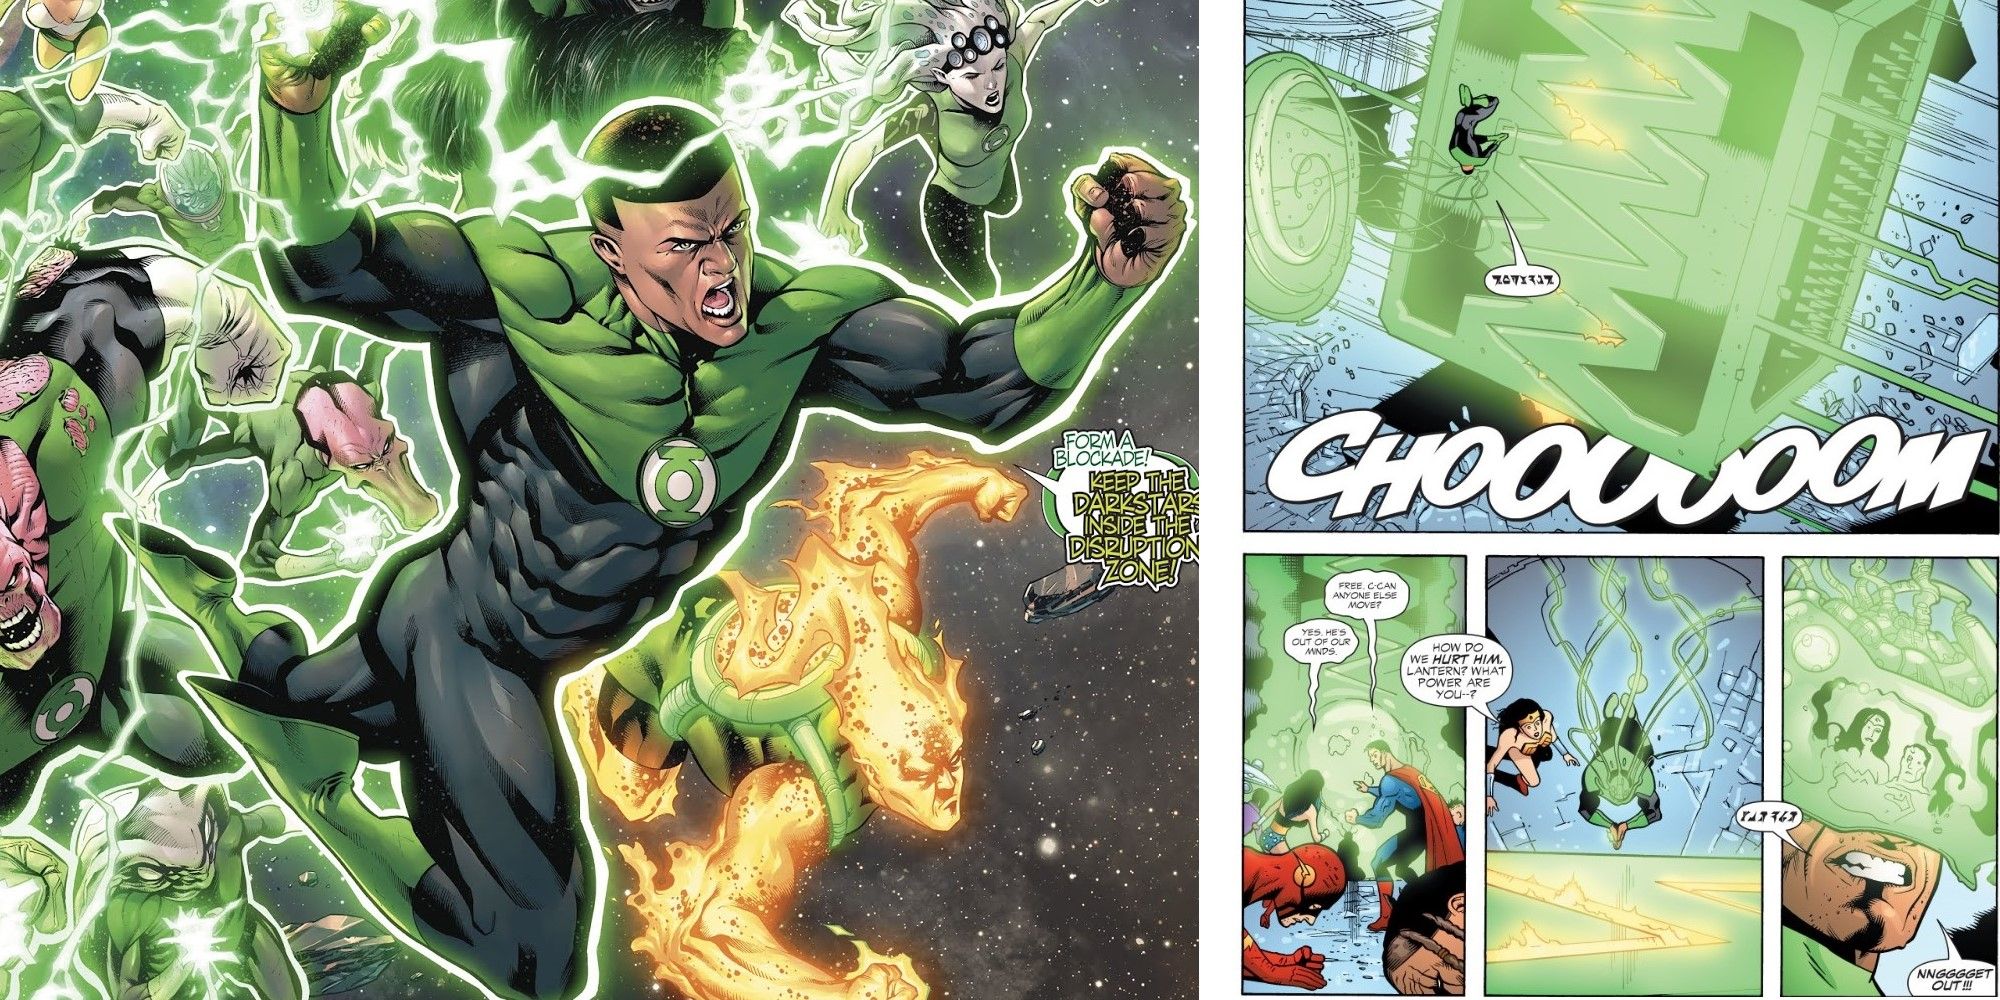 Green Lantern creates a mask against mind control to face Martian Manhunter